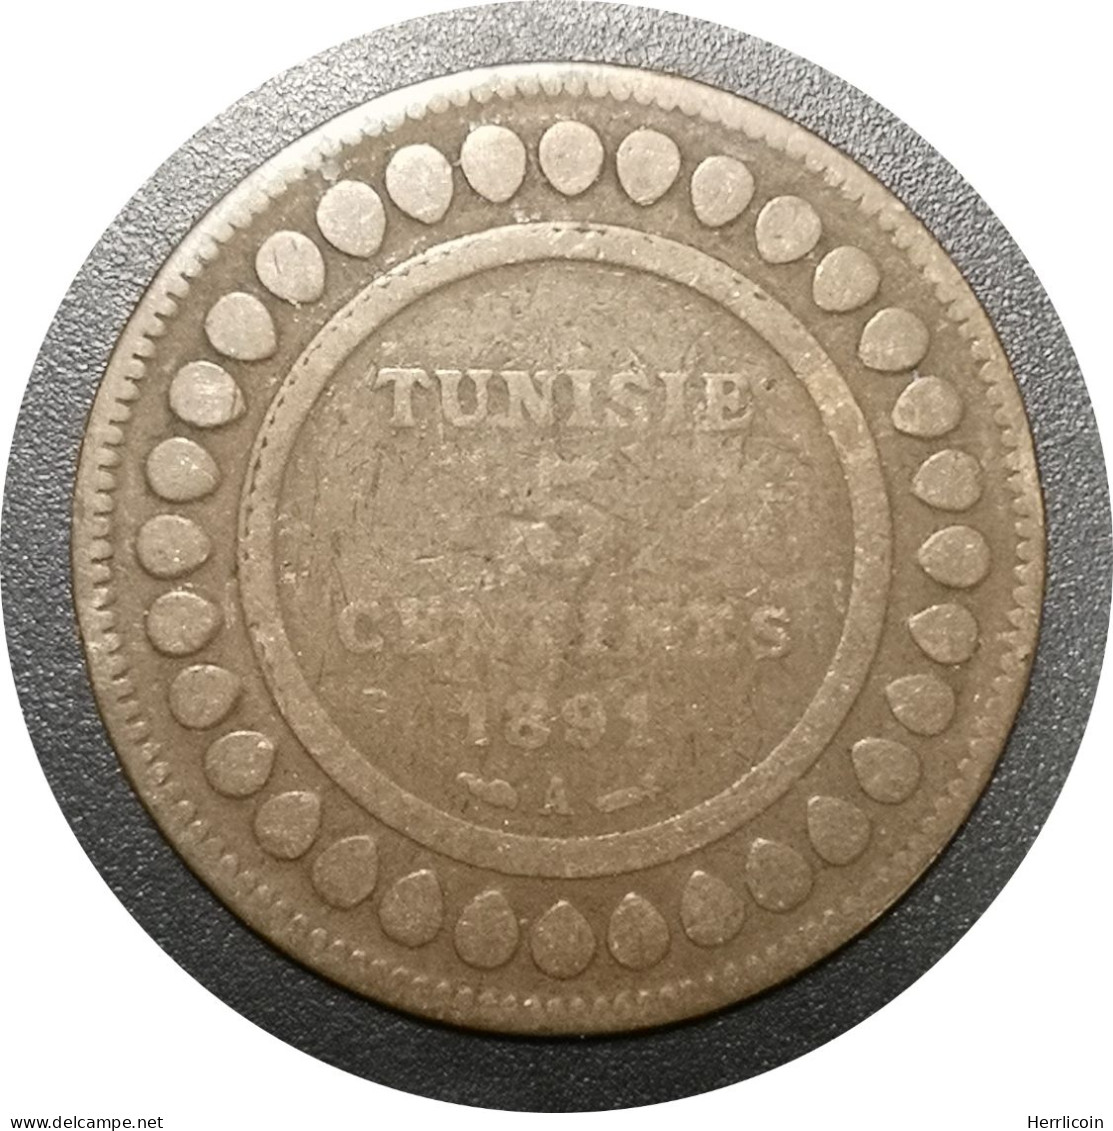 Monnaie Tunisie - 1891 - 5 Centimes Ali Protectorat Français - Tunisie